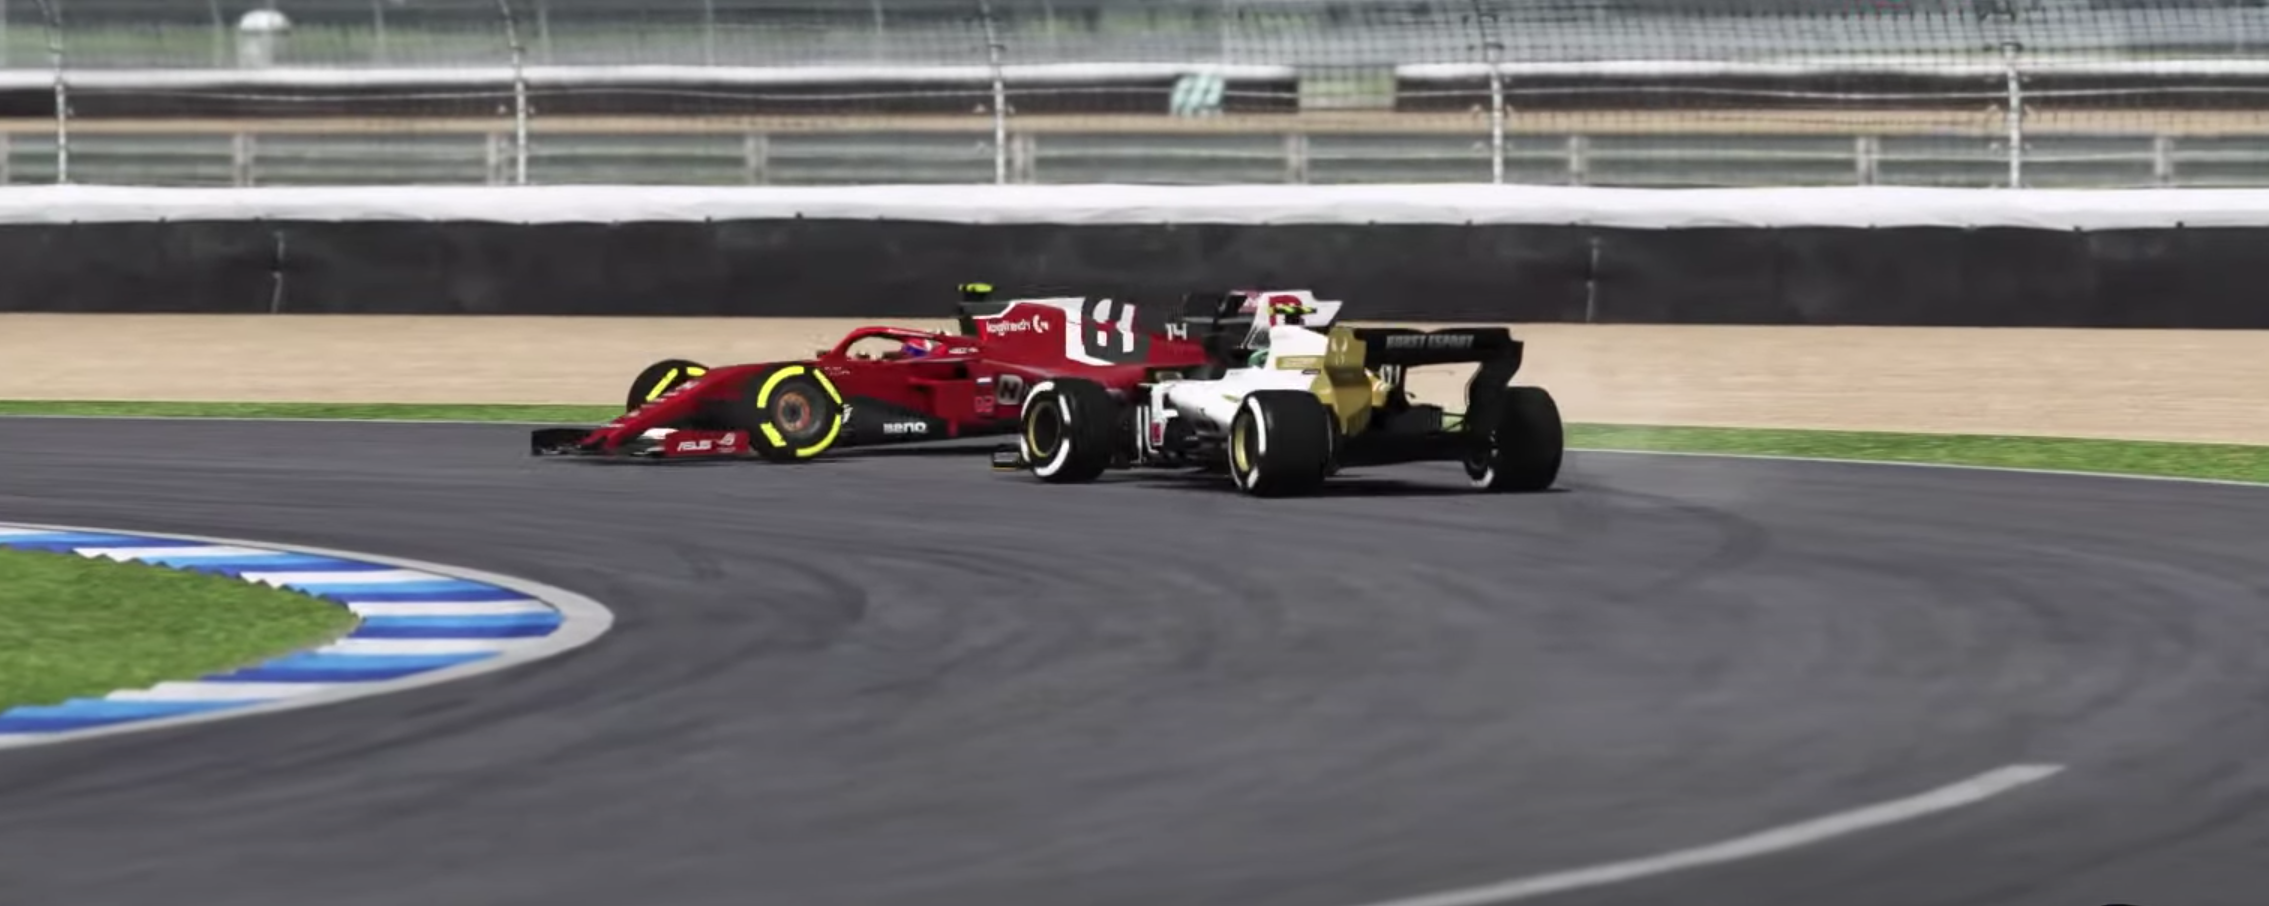 Jeroen Kweekel and Jernej Simoncic collision Indianapolis Formula SimRacing